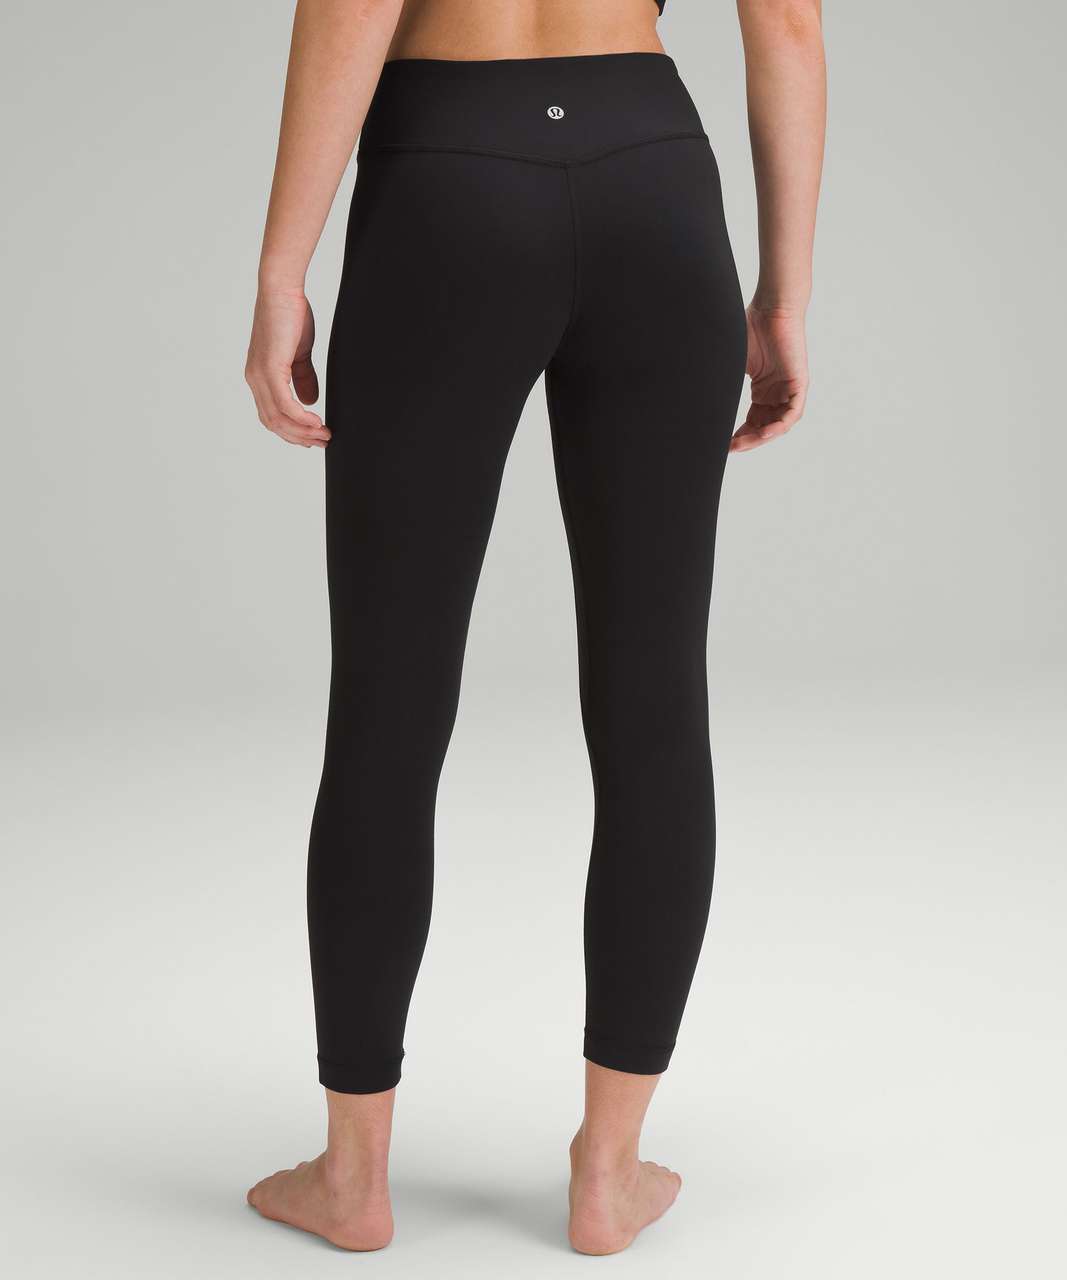 Lulu Align 25 Yoga Pants High Rise Women Sport Black Leggings All Size NEW